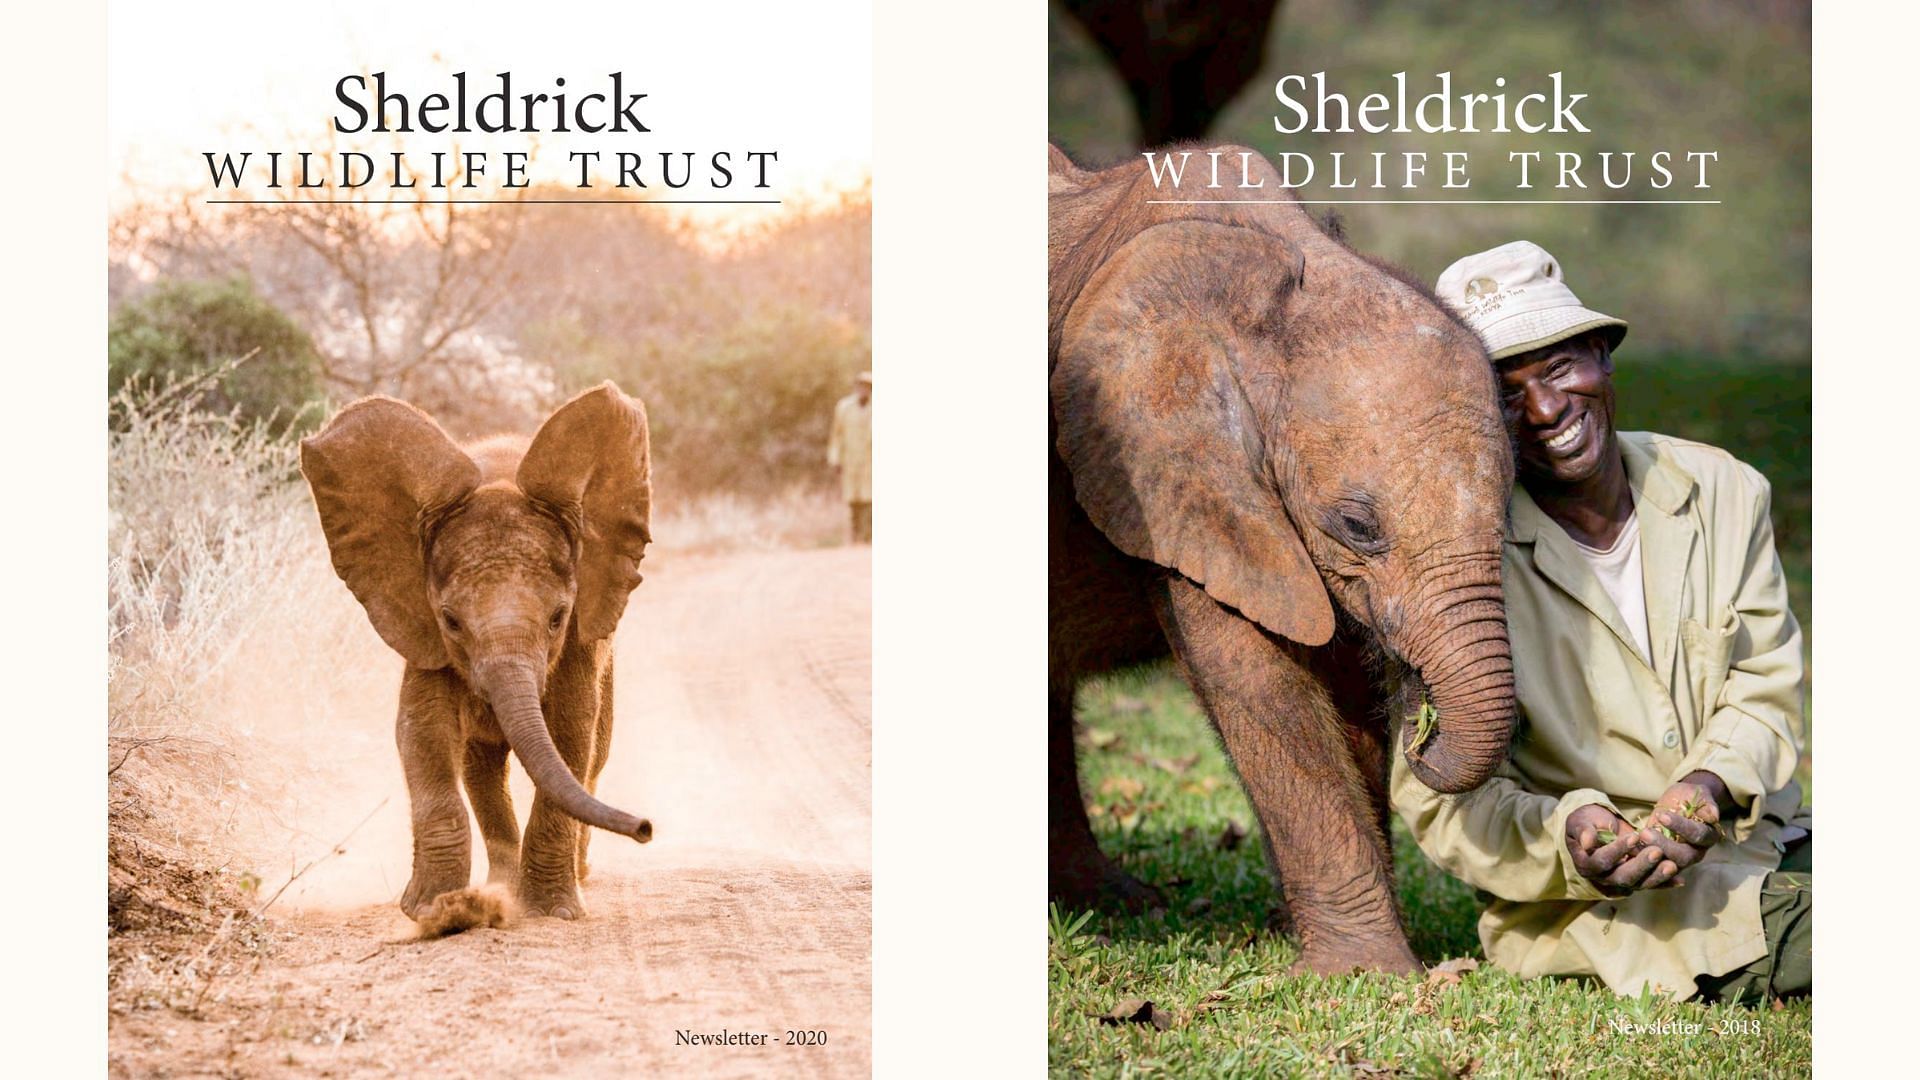 The Sheldrick Trust aims to rescue and rehabilitate wildlife (image via sheldrickwildlifetrust.org)